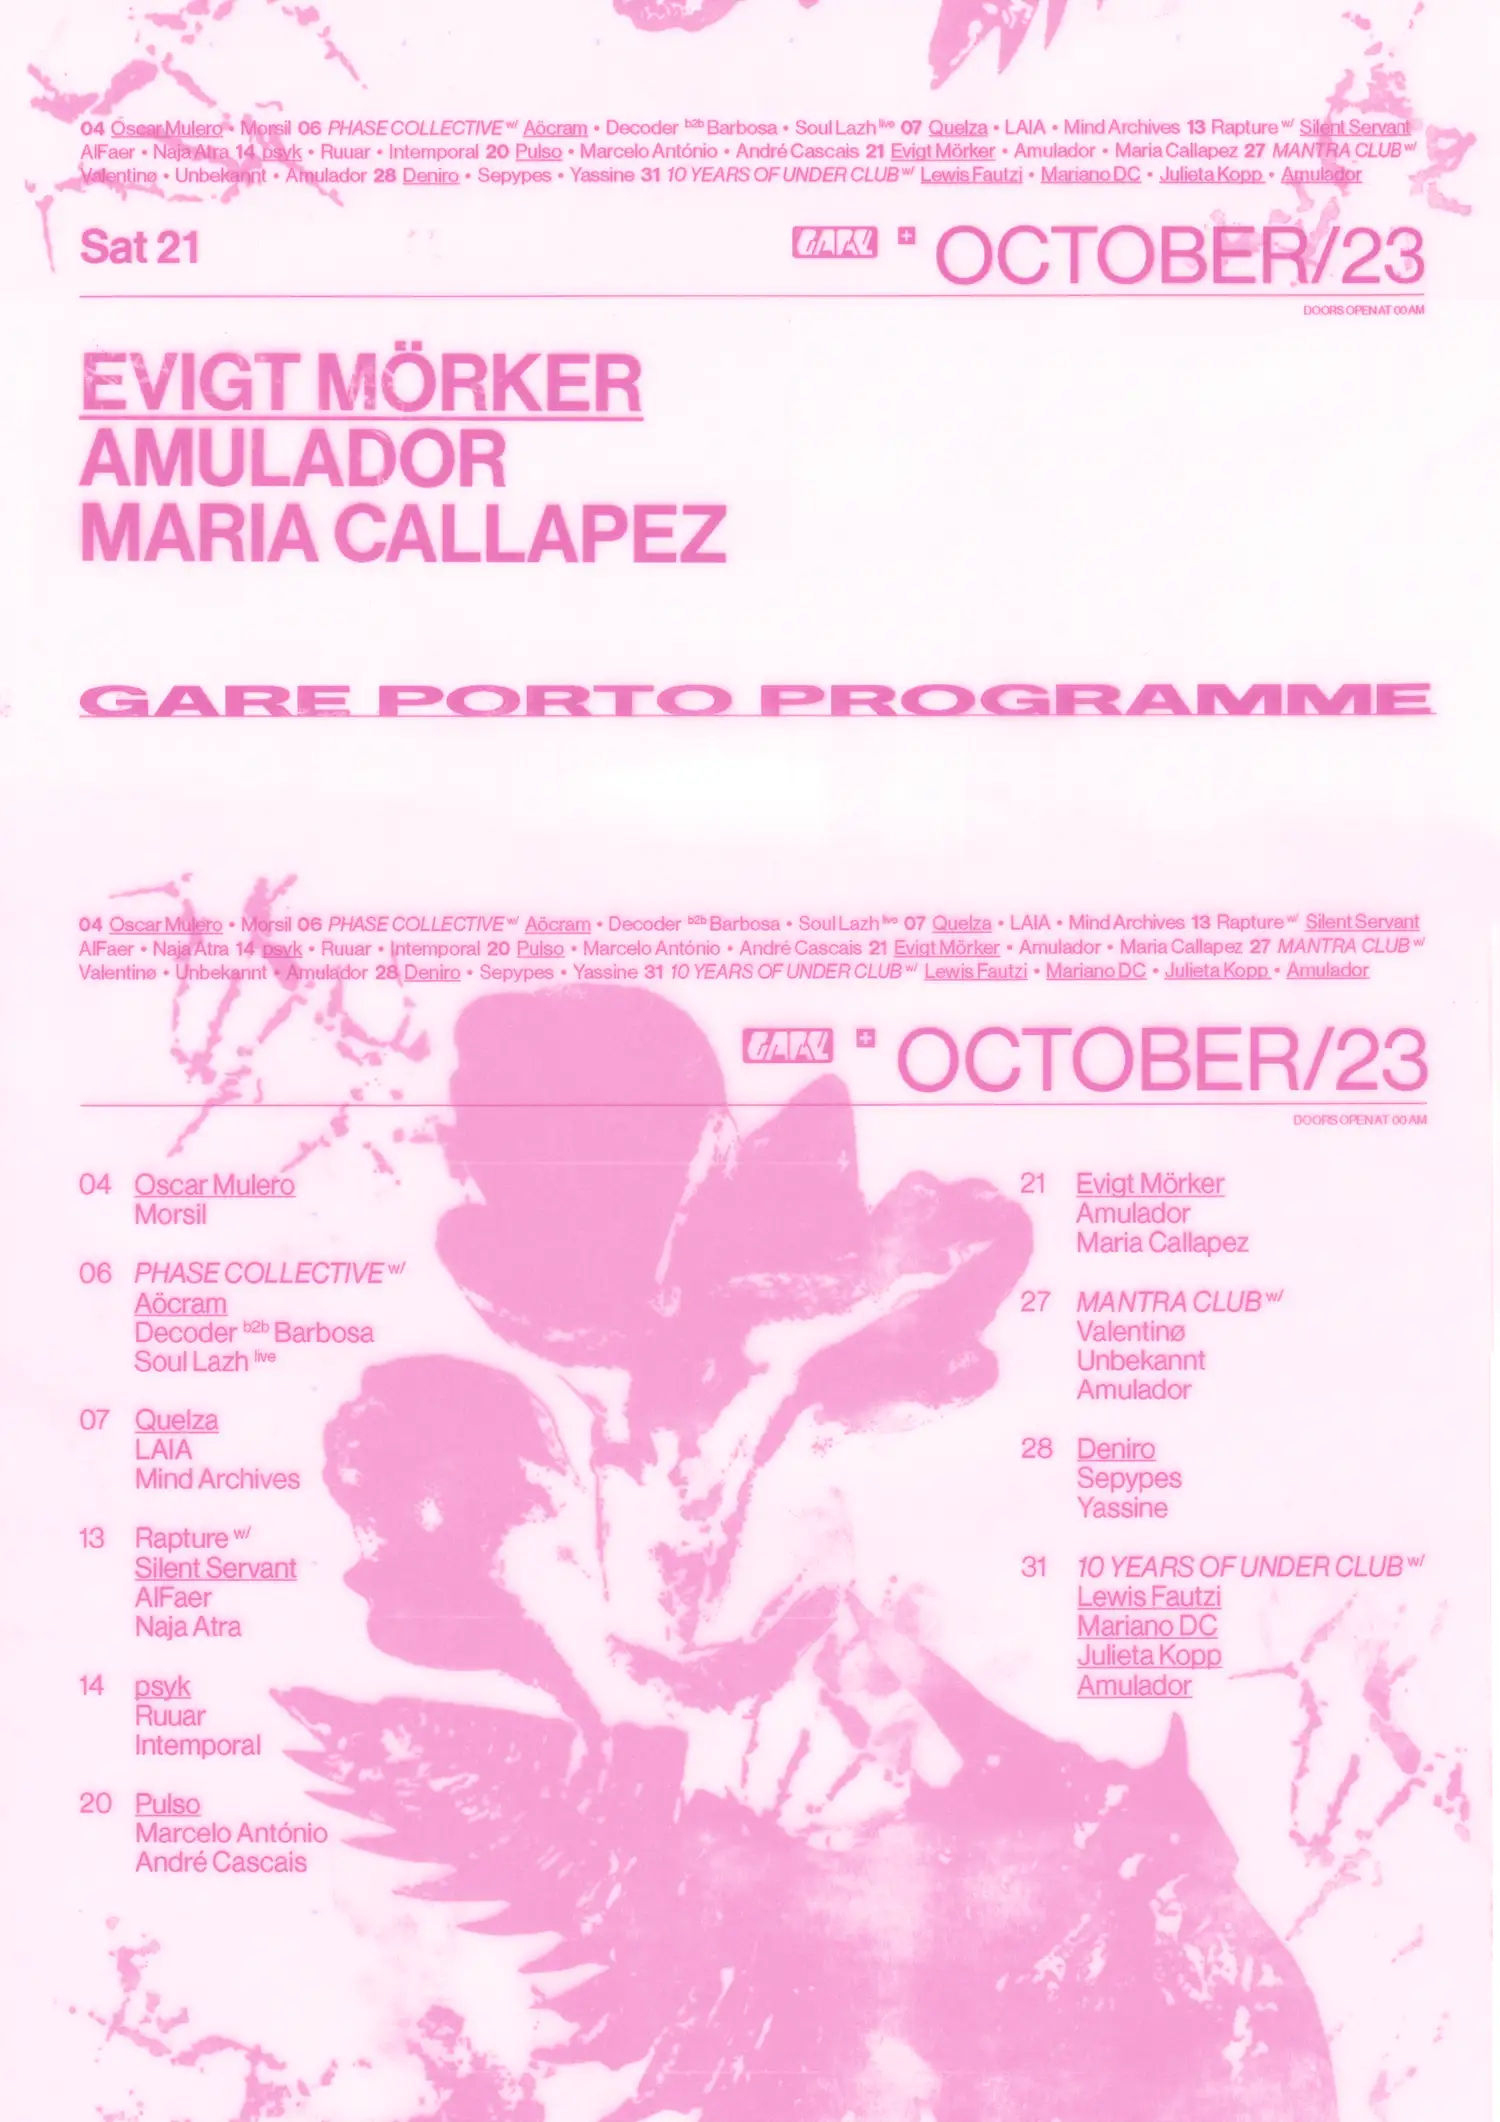 Evigt Mörker + Amulador + Maria Callapez